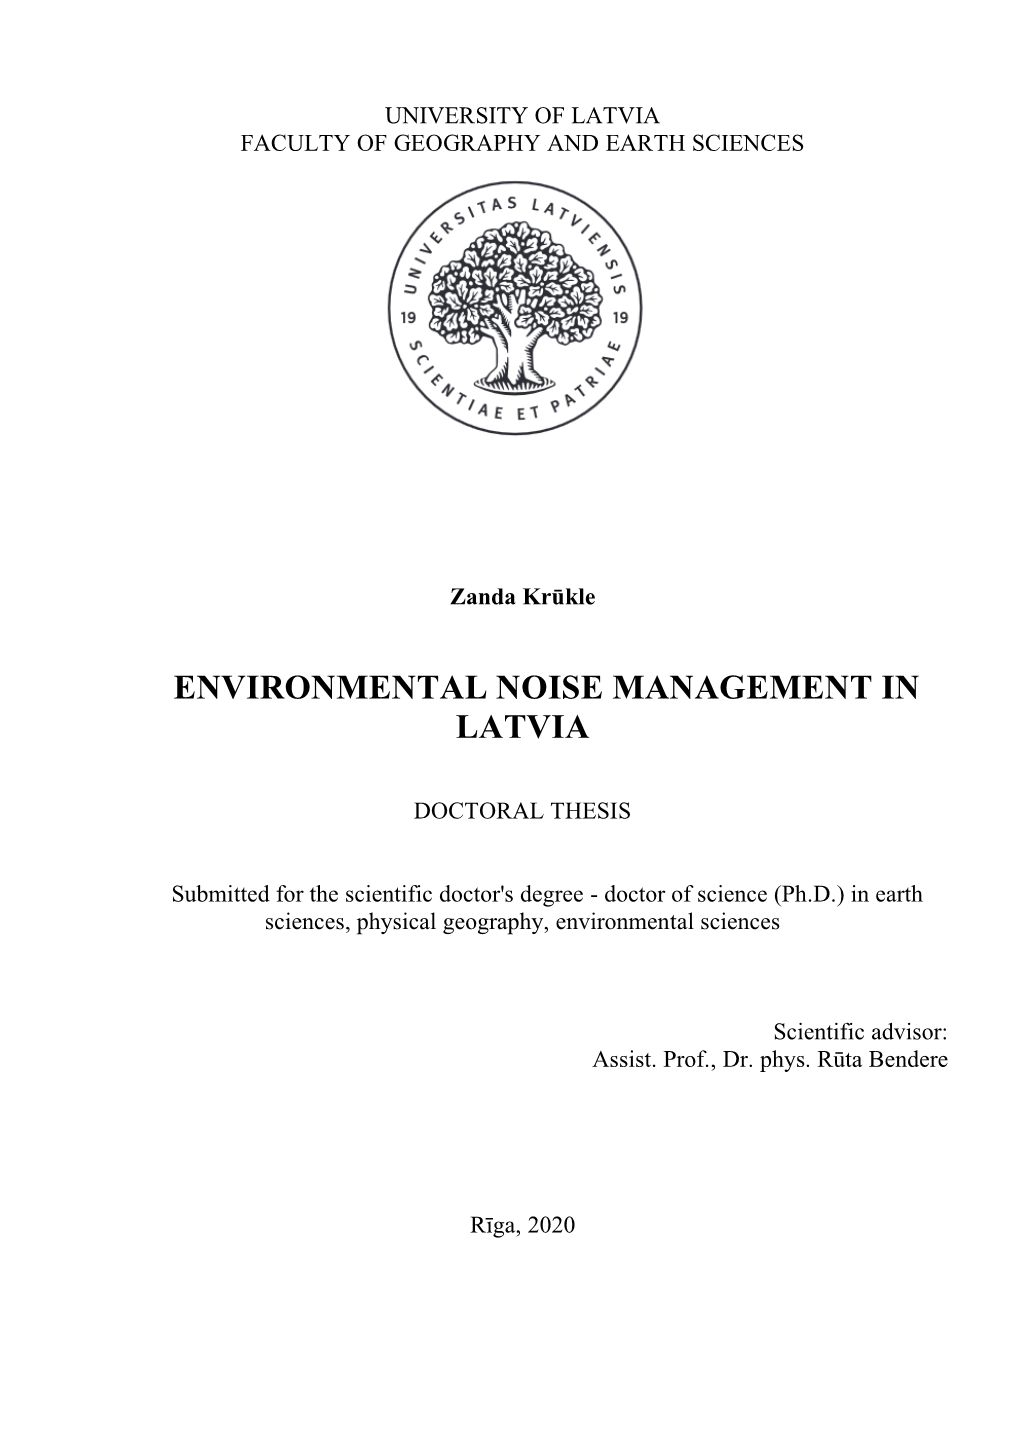 Environmental Noise Management in Latvia